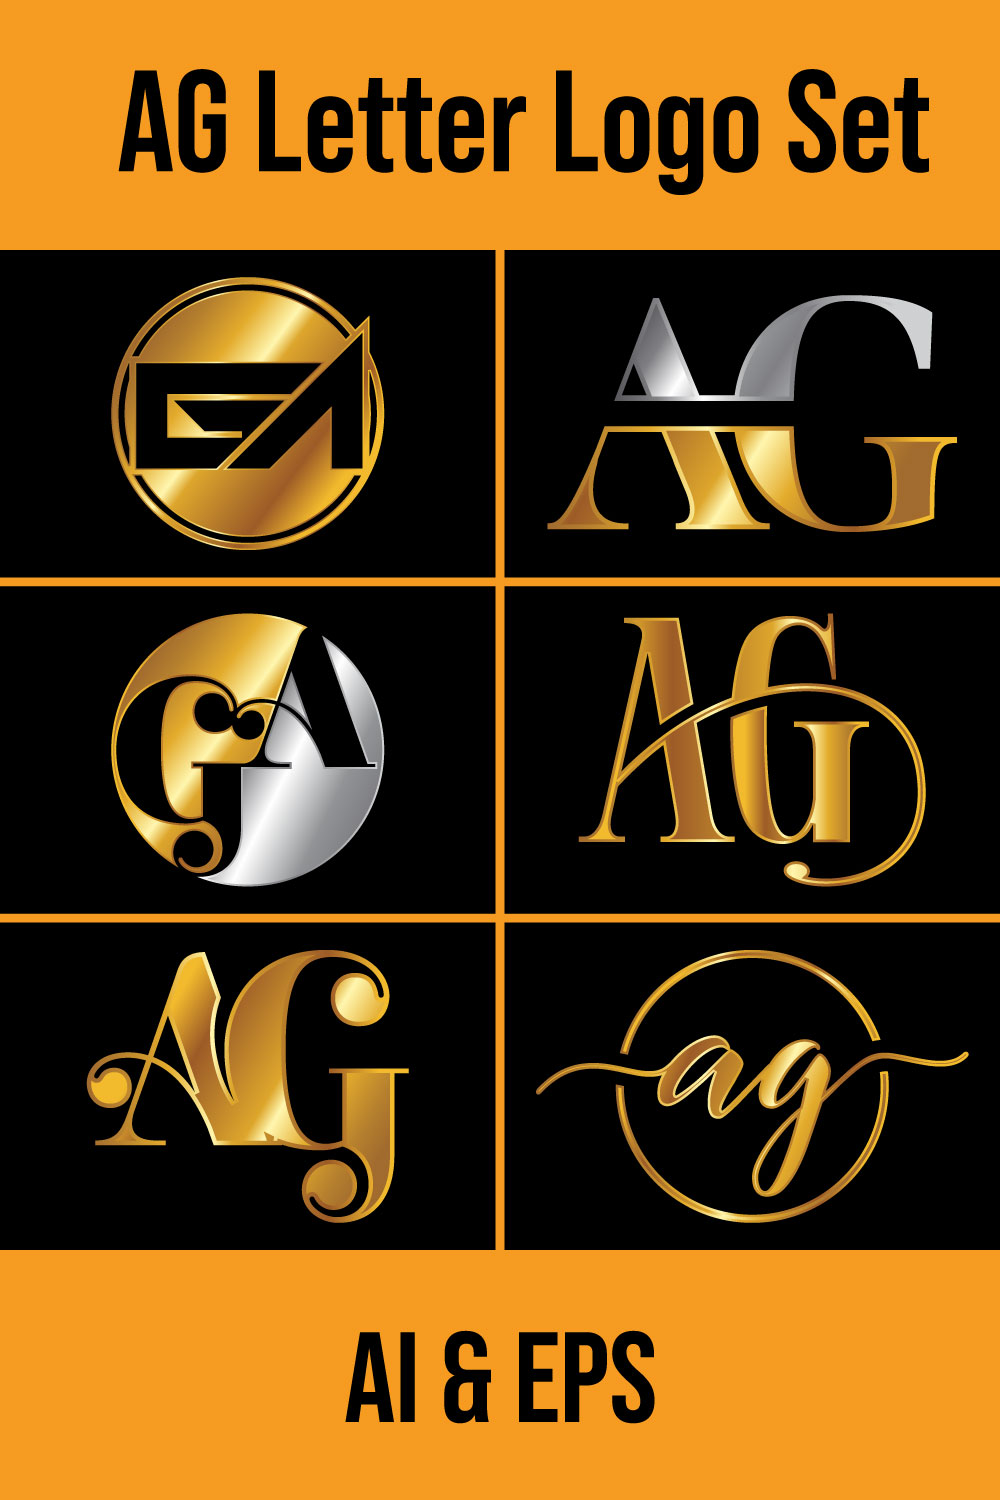 A-G Initial Letter Logo Design Pinterest image.